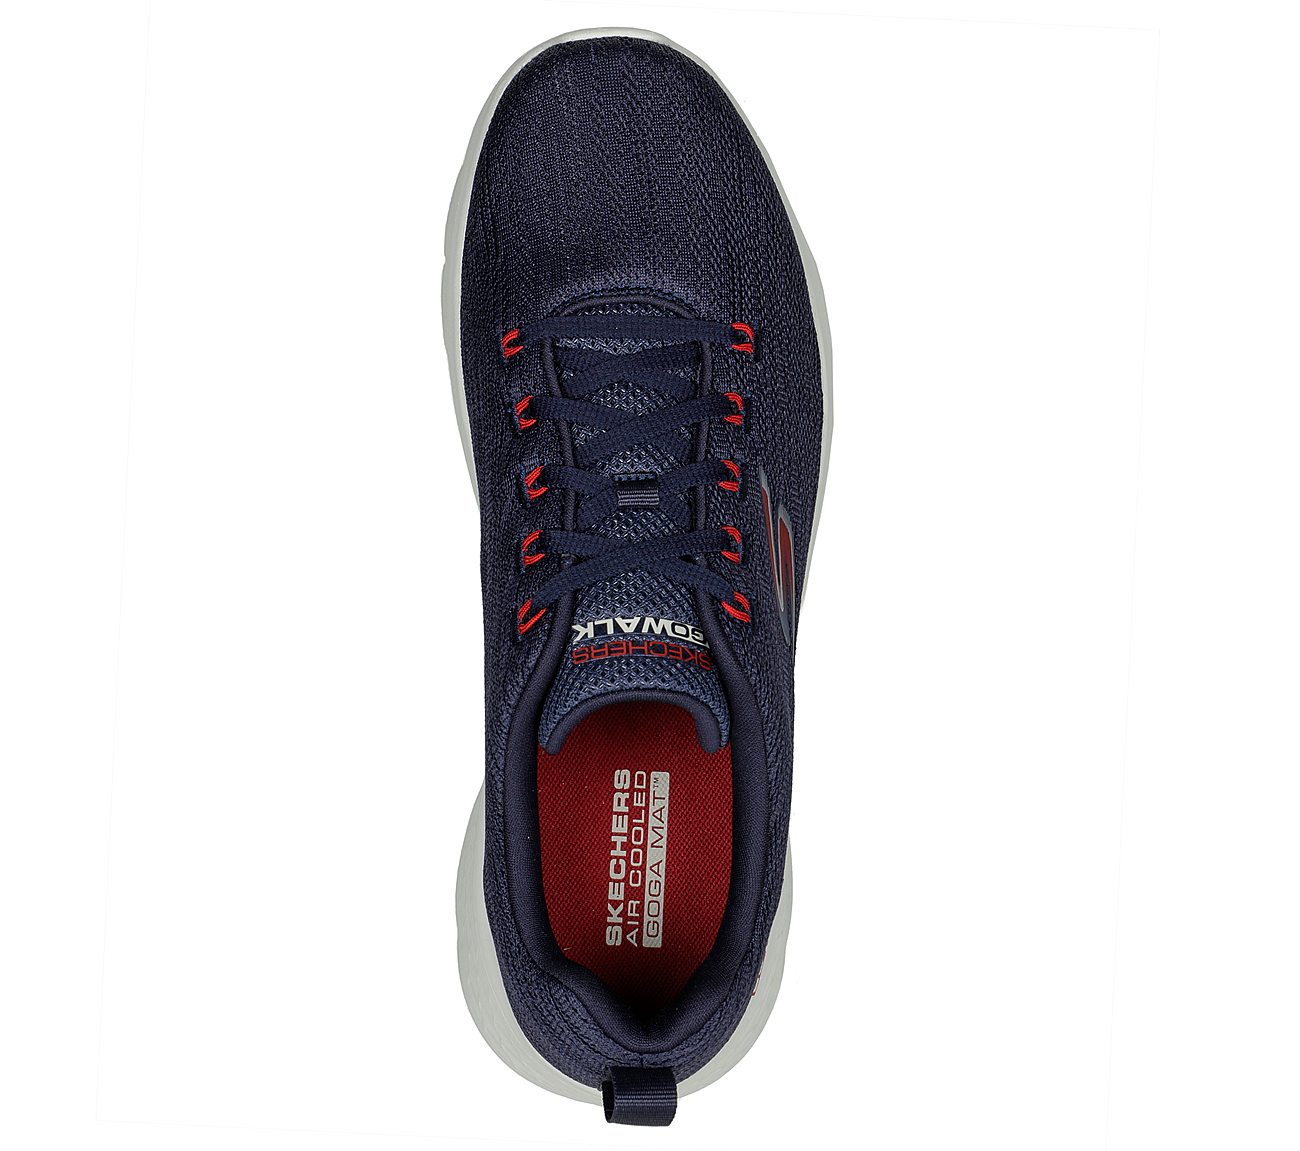 GO WALK FLEX, NAVY/RED Footwear Top View